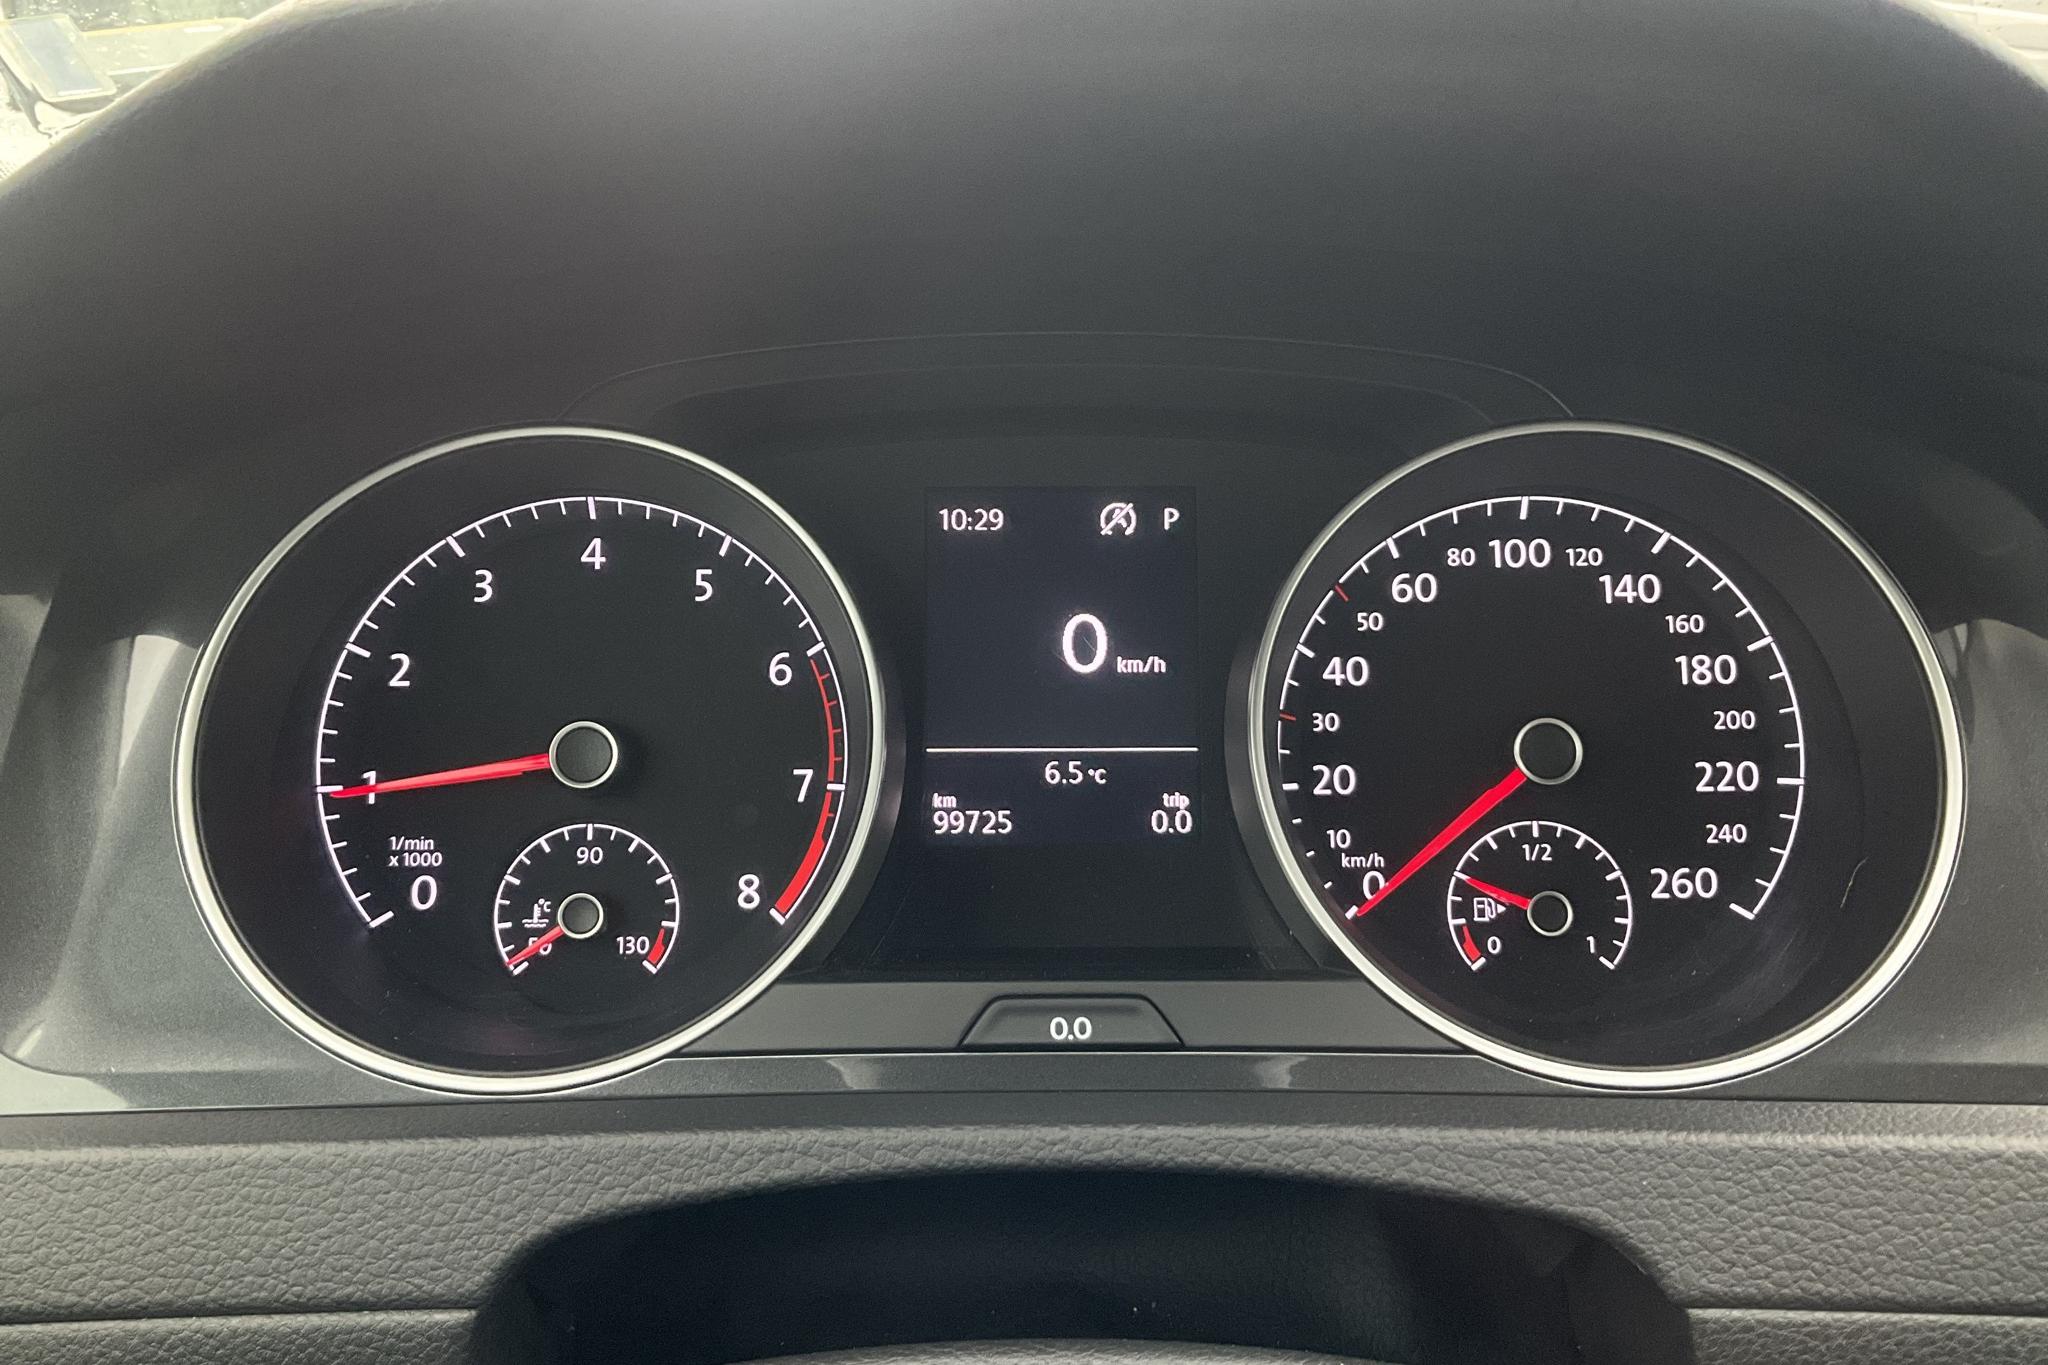 VW Golf VII 1.0 TSI Sportscombi (110hk) - 9 973 mil - Automat - silver - 2017